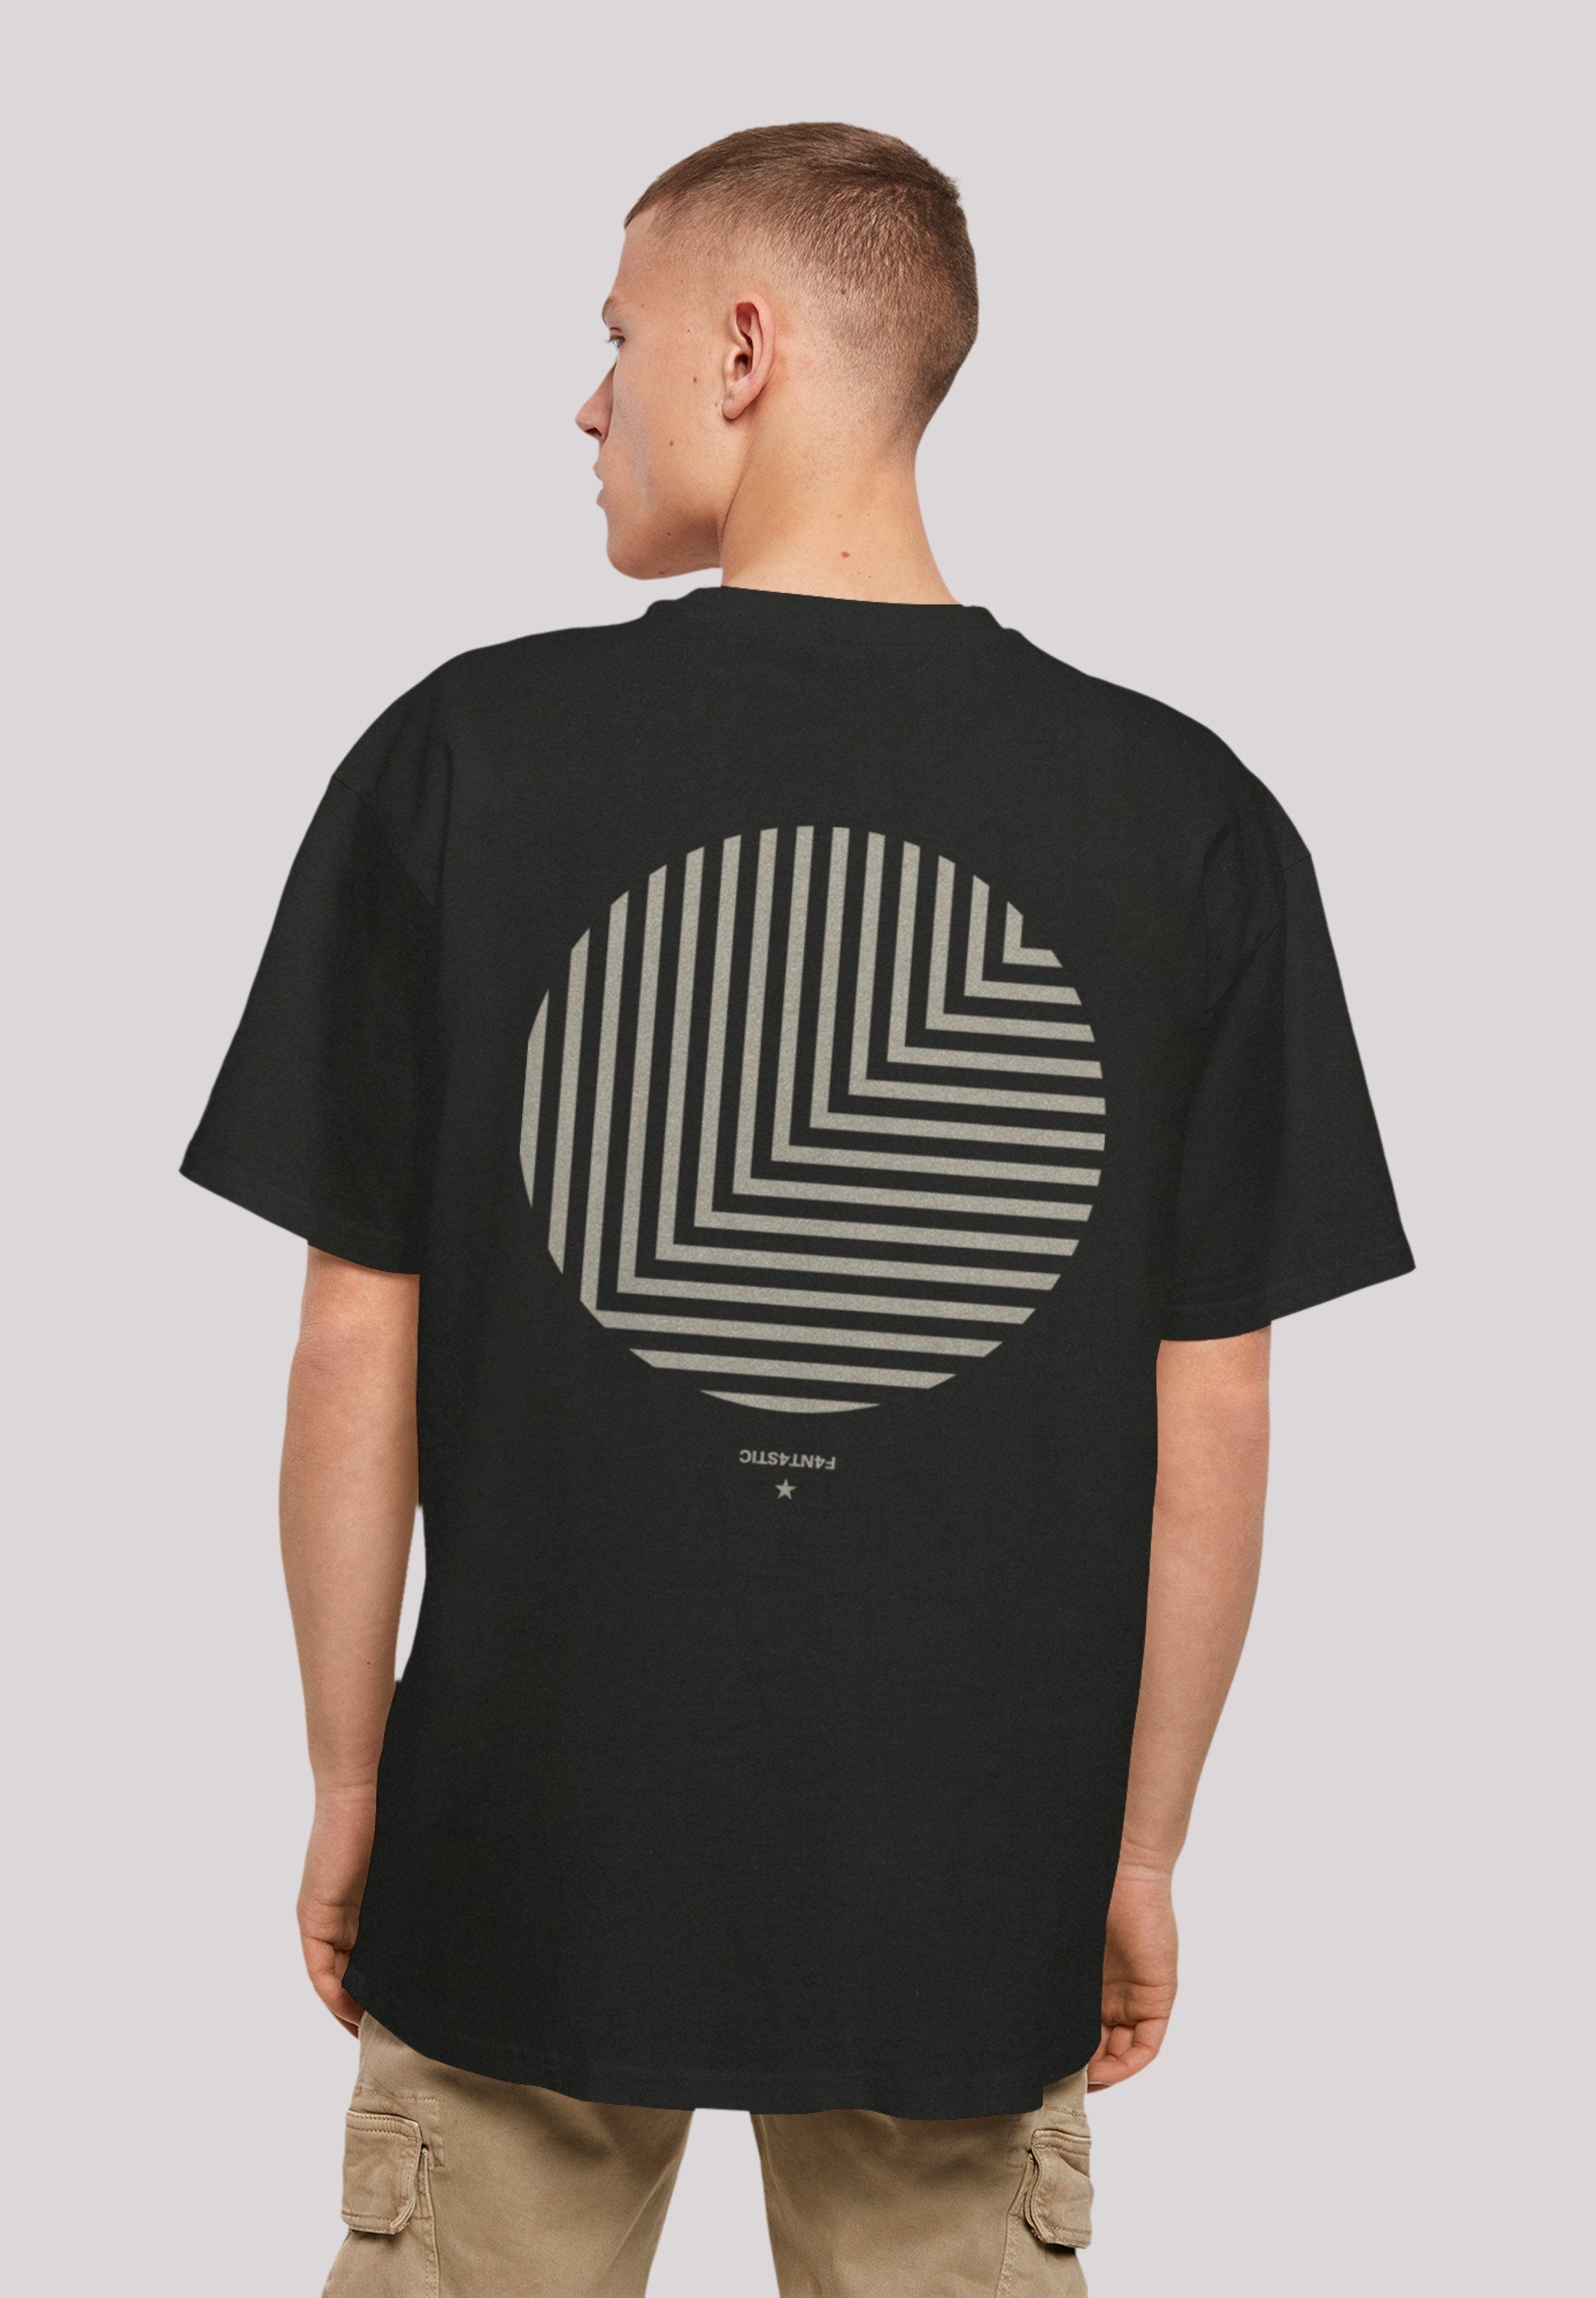 F4NT4STIC T-Shirt Geometrics Grau Print schwarz